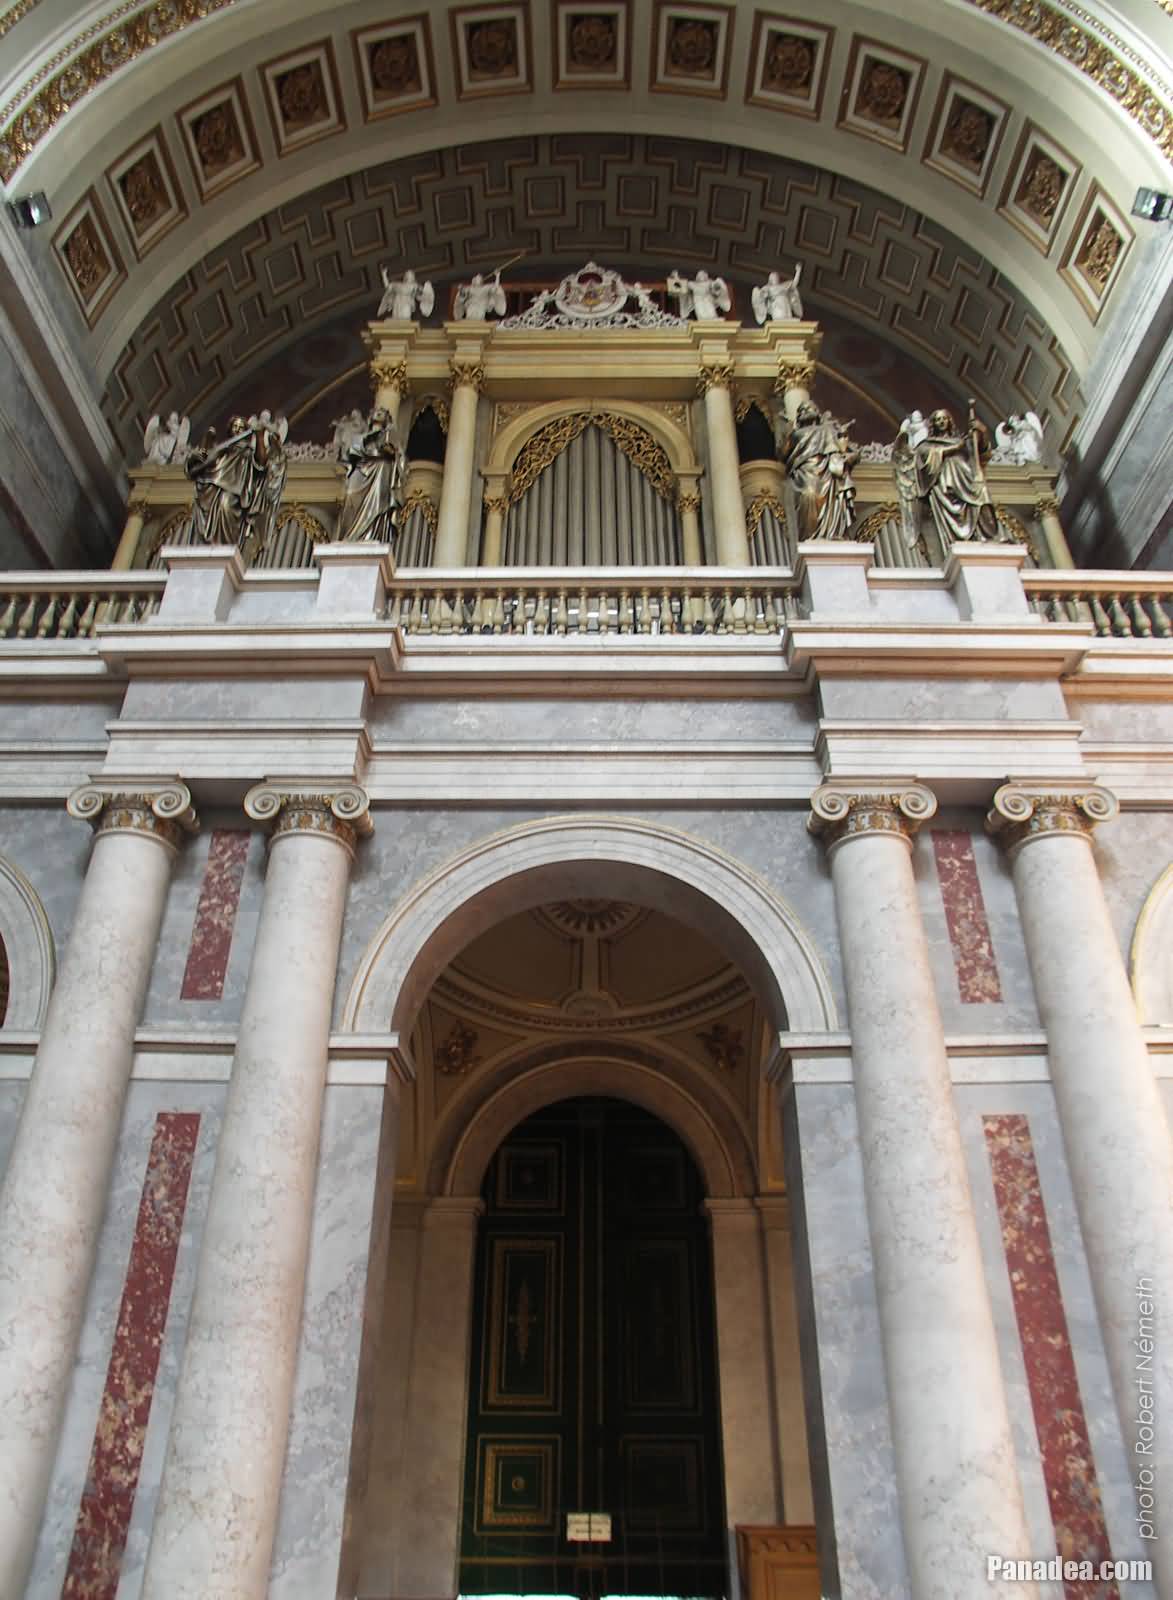 The Esztergom Basilica Organ And The Main Entrance